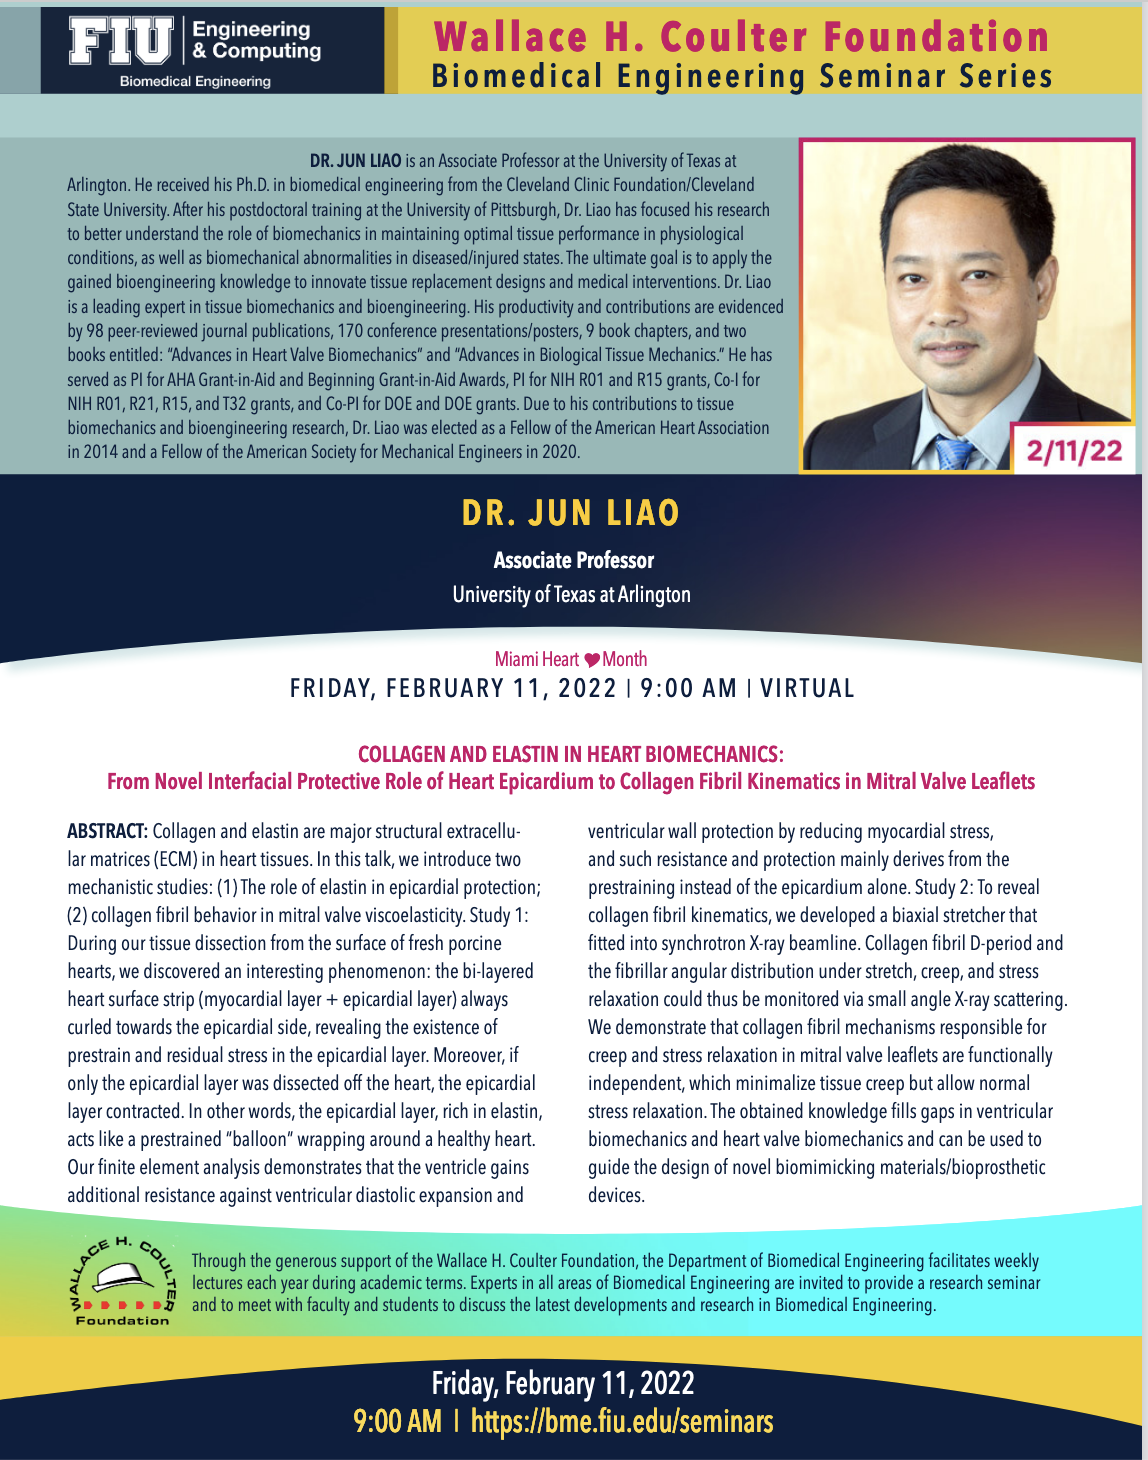 Dr. Jun Liao  Associate Professor, University of Texas at Arlington